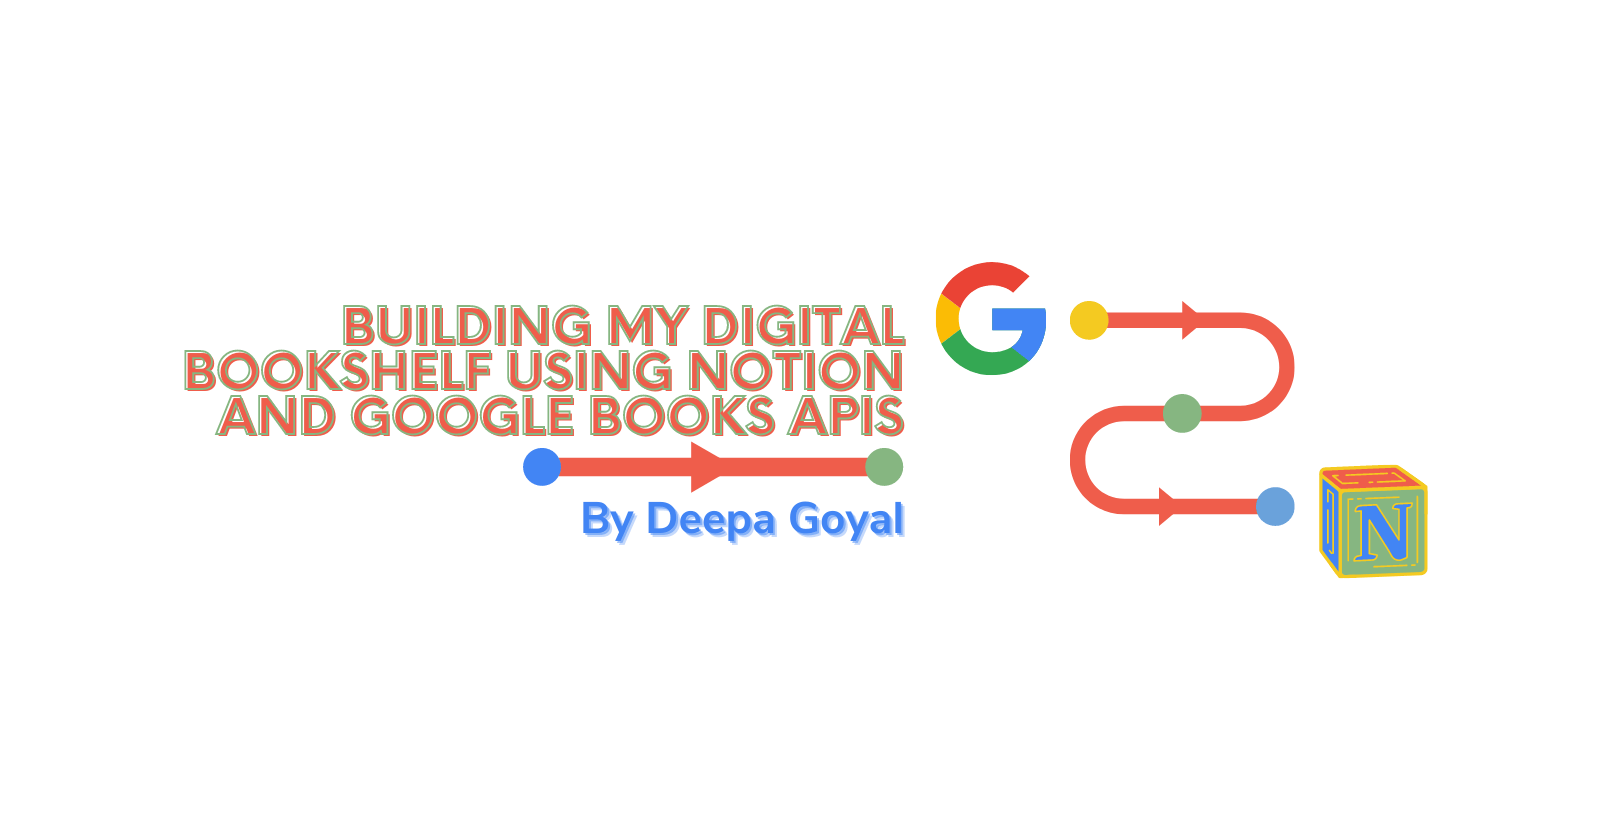 Building my digital bookshelf using Notion and Google Books APIs